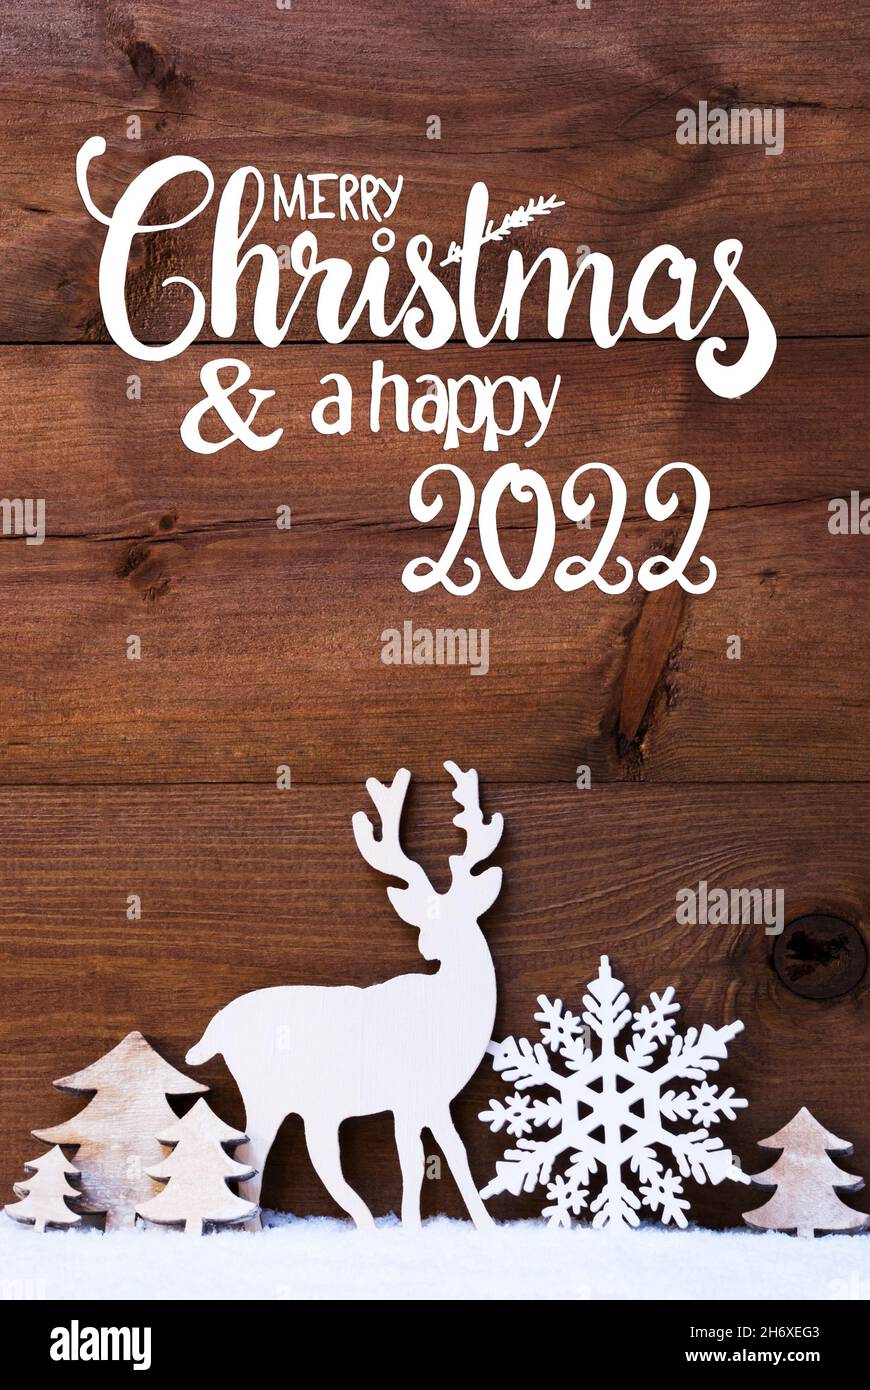 Christmas Tree, Snow, Deer, Merry Christmas And Happy 2022 Stock Photo